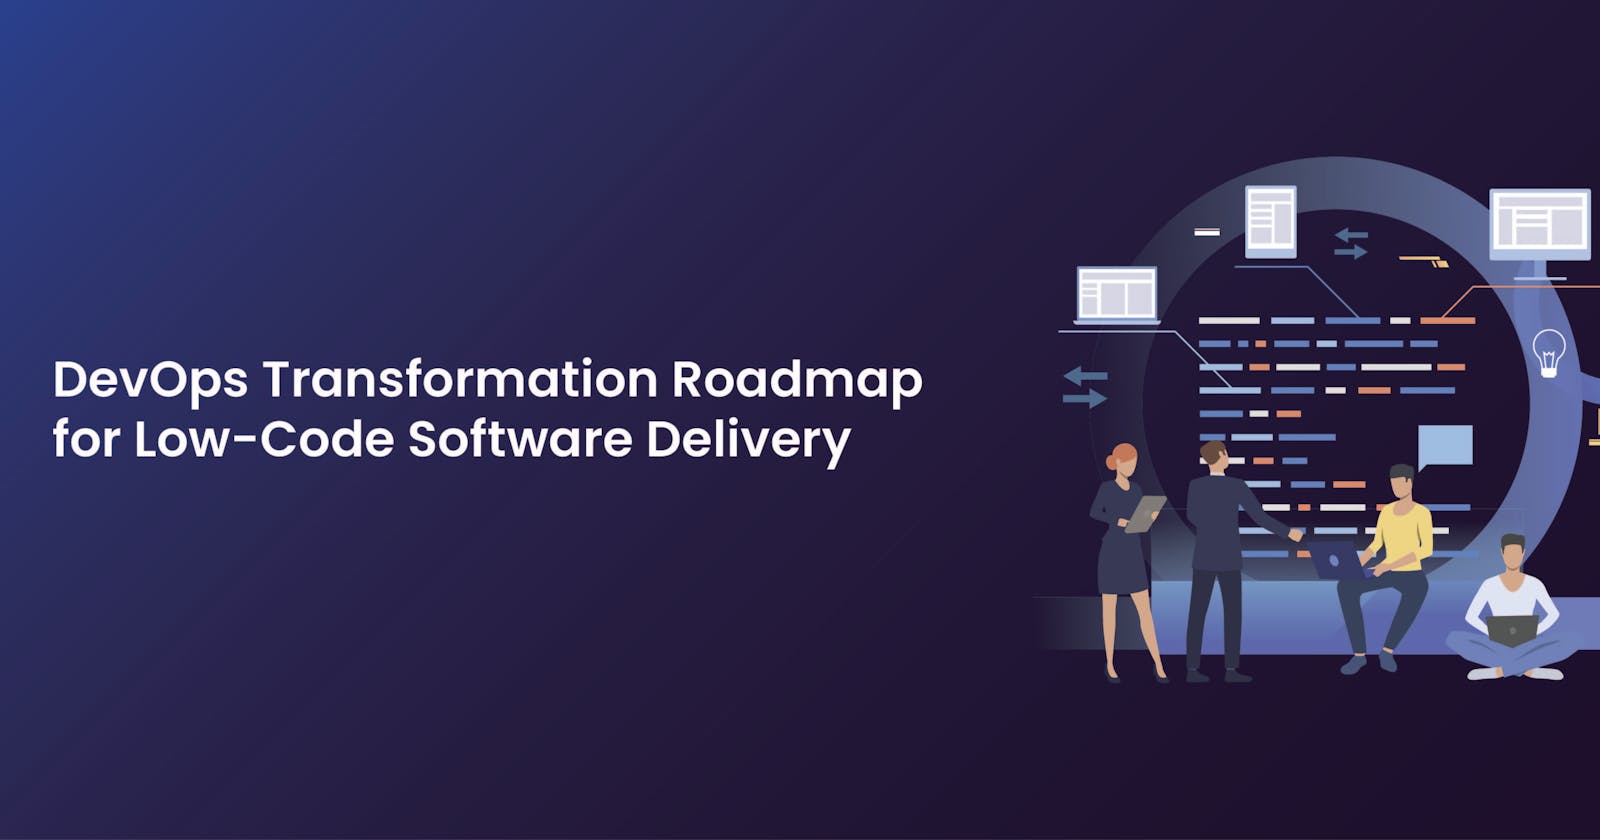 DevOps Transformation Roadmap for Low-Code Software Delivery